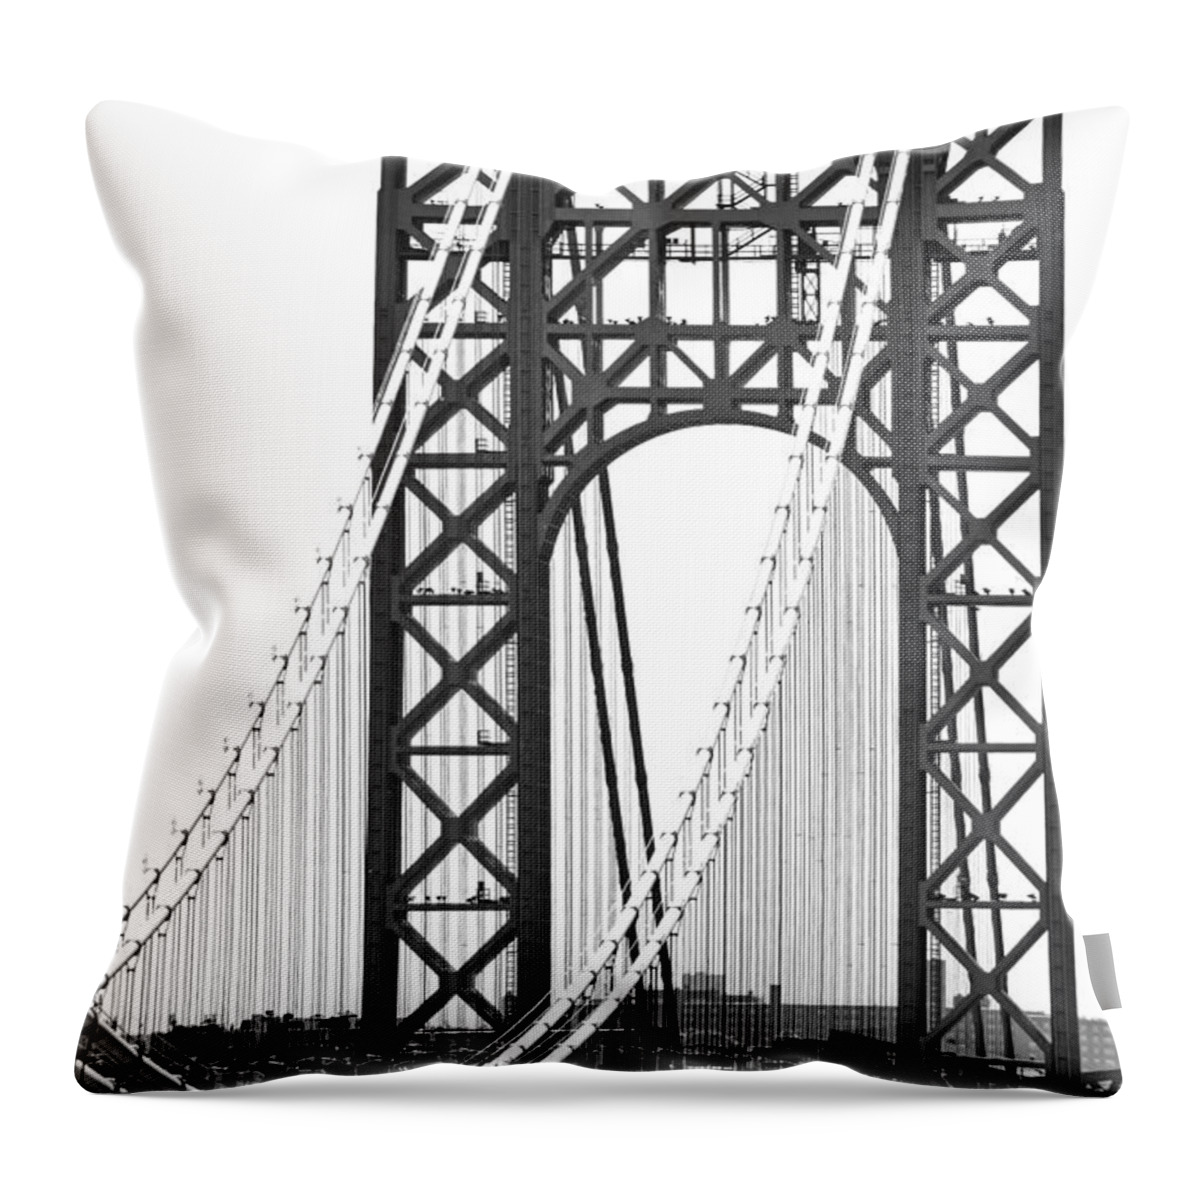 George Washington Bridge Throw Pillow featuring the photograph George Washington Bridge NJ Tower by Regina Geoghan